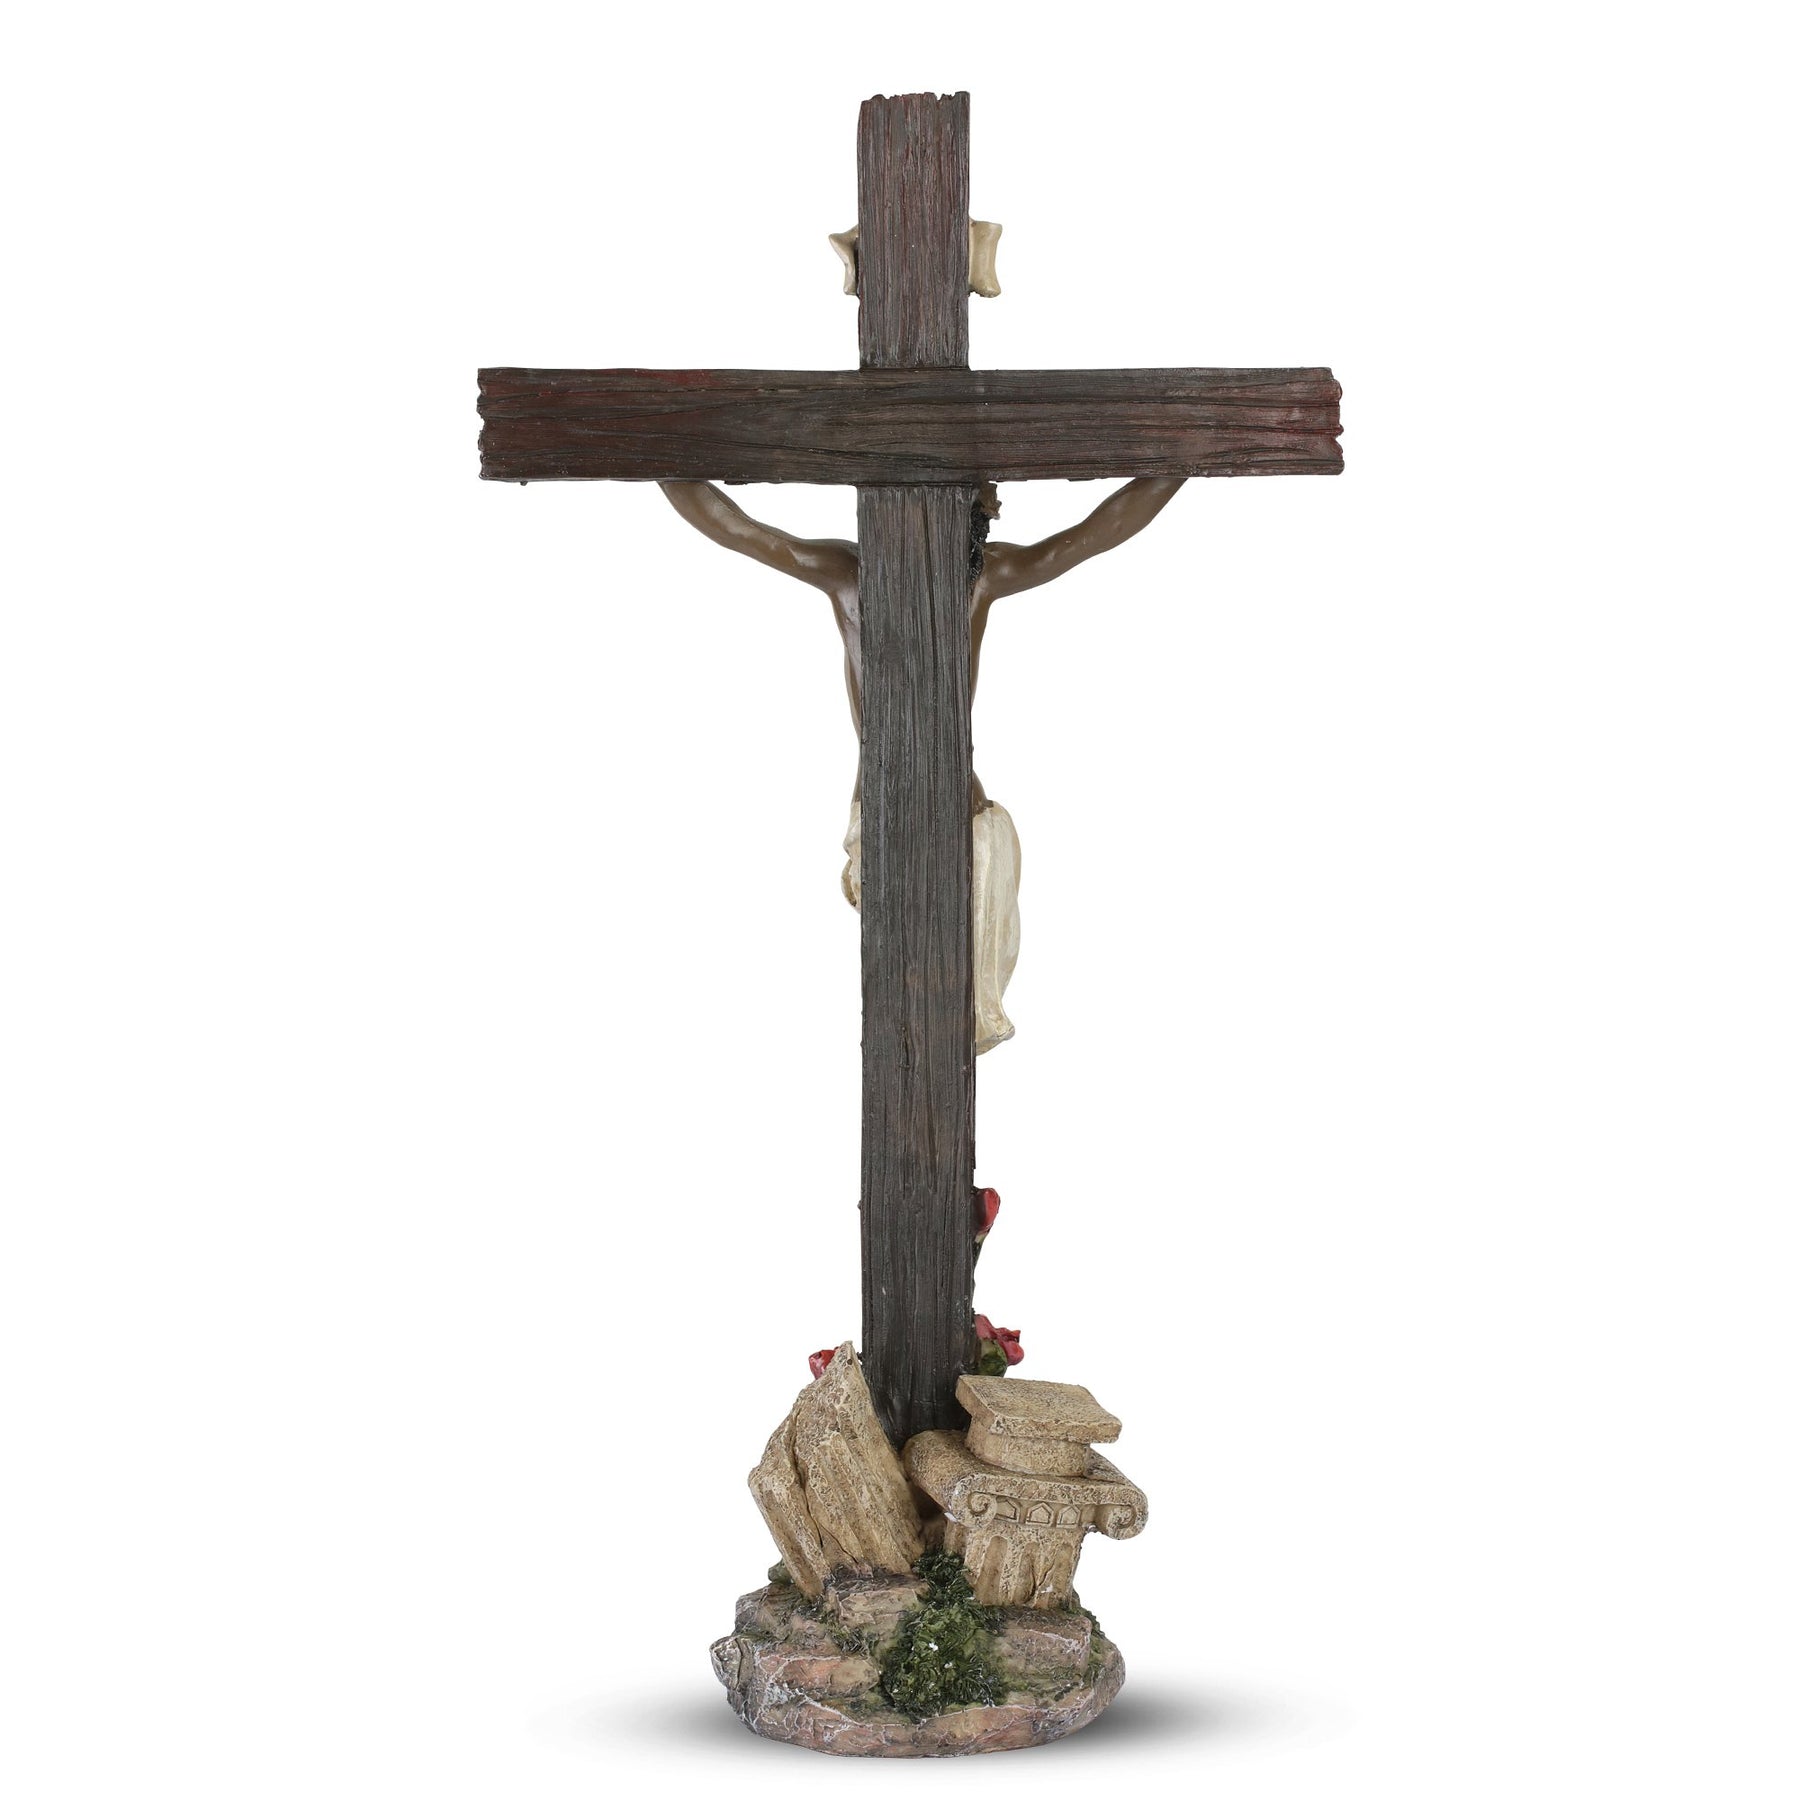 3 of 3: The Ultimate Sacrifice: African American Jesus Figurine (Rear)